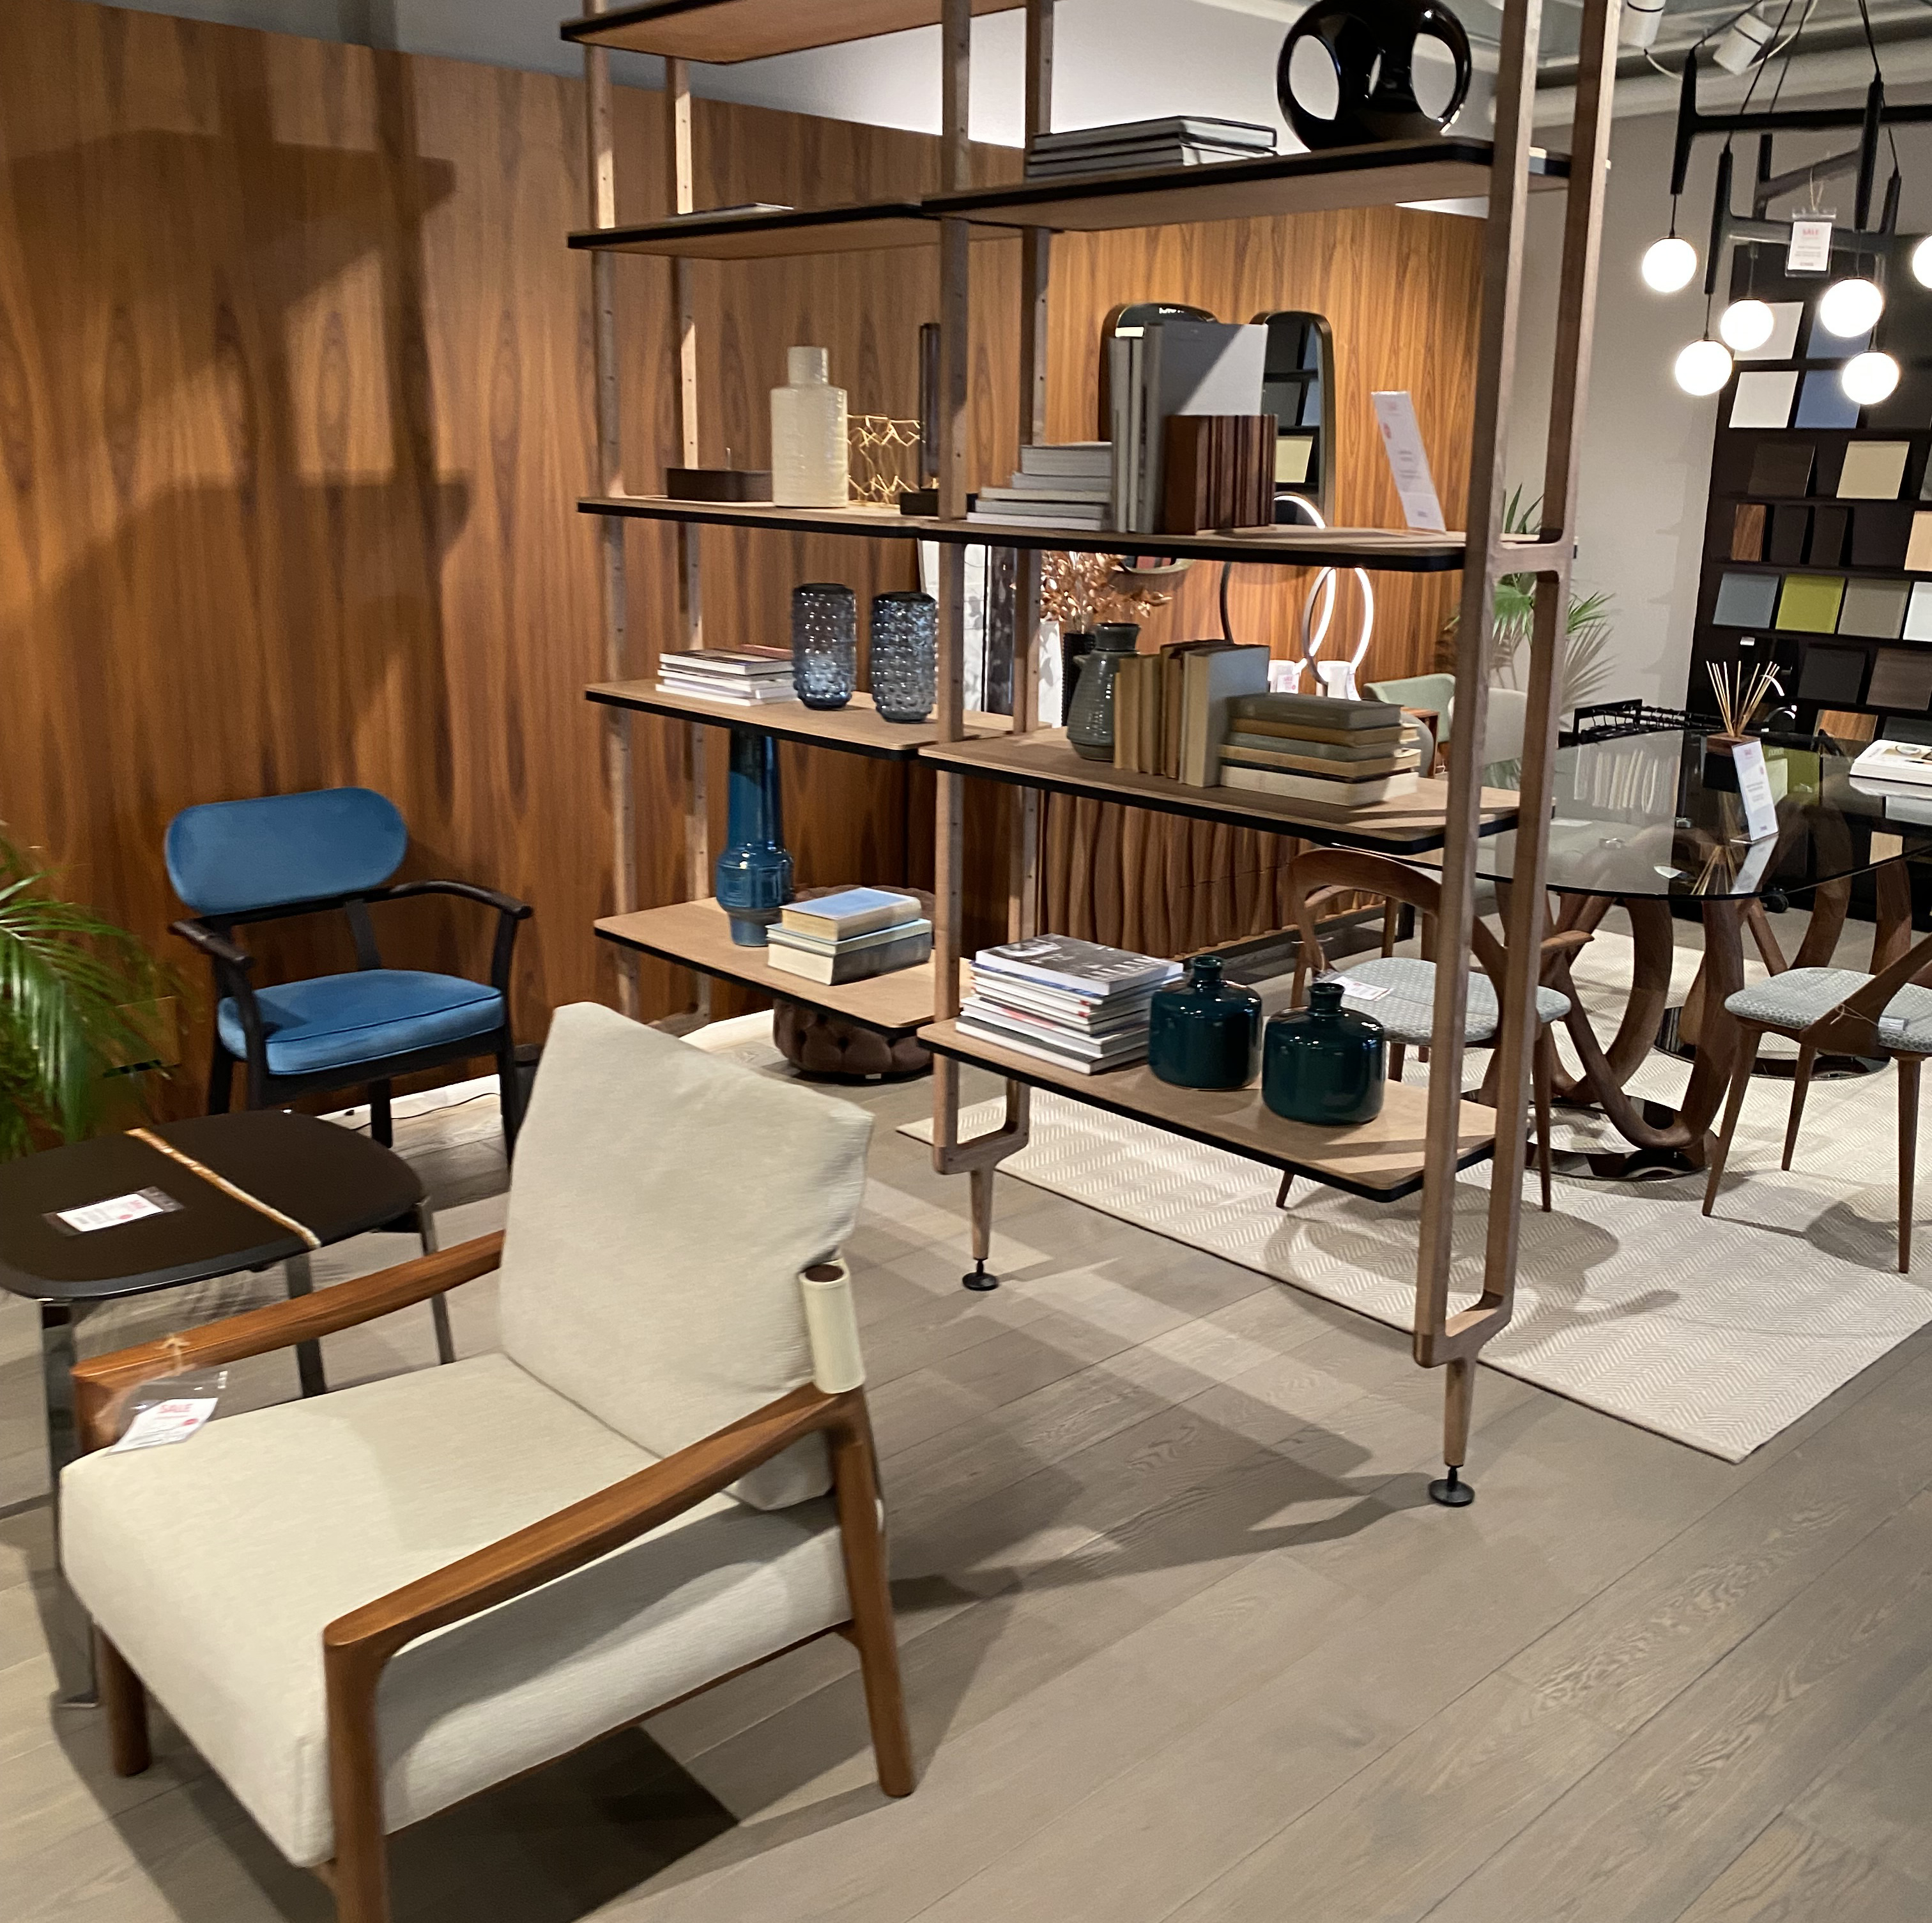 Italian furniture designer Porada's showroom - installed by Spring Box London